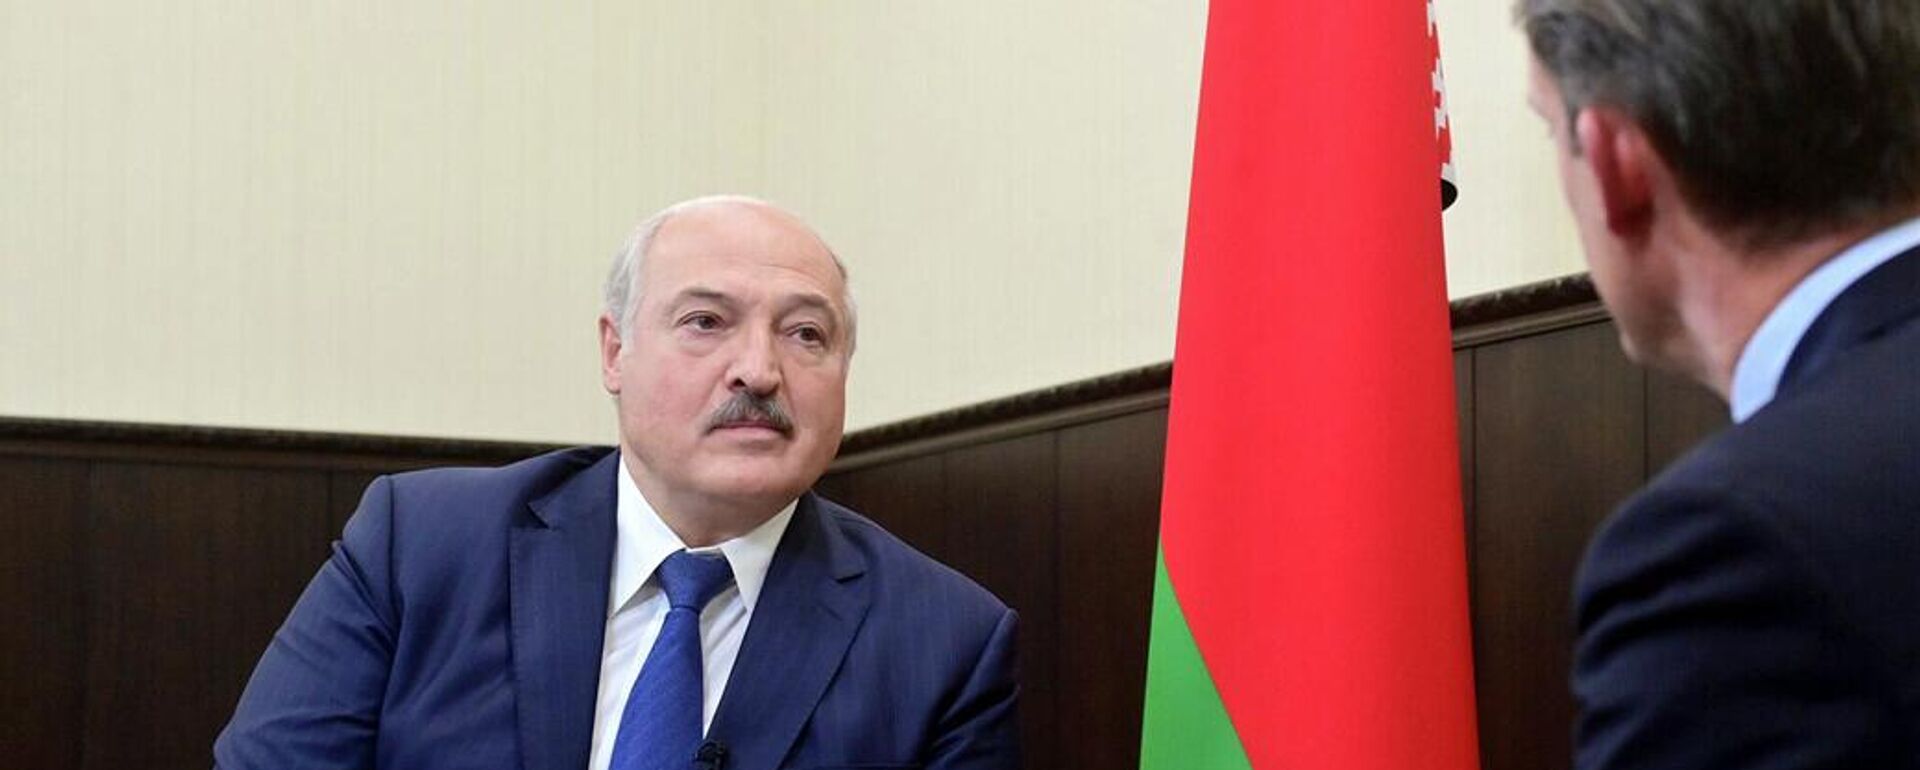 Alexander Lukashenko, presidente de Bielorrusia - Sputnik Mundo, 1920, 15.10.2022